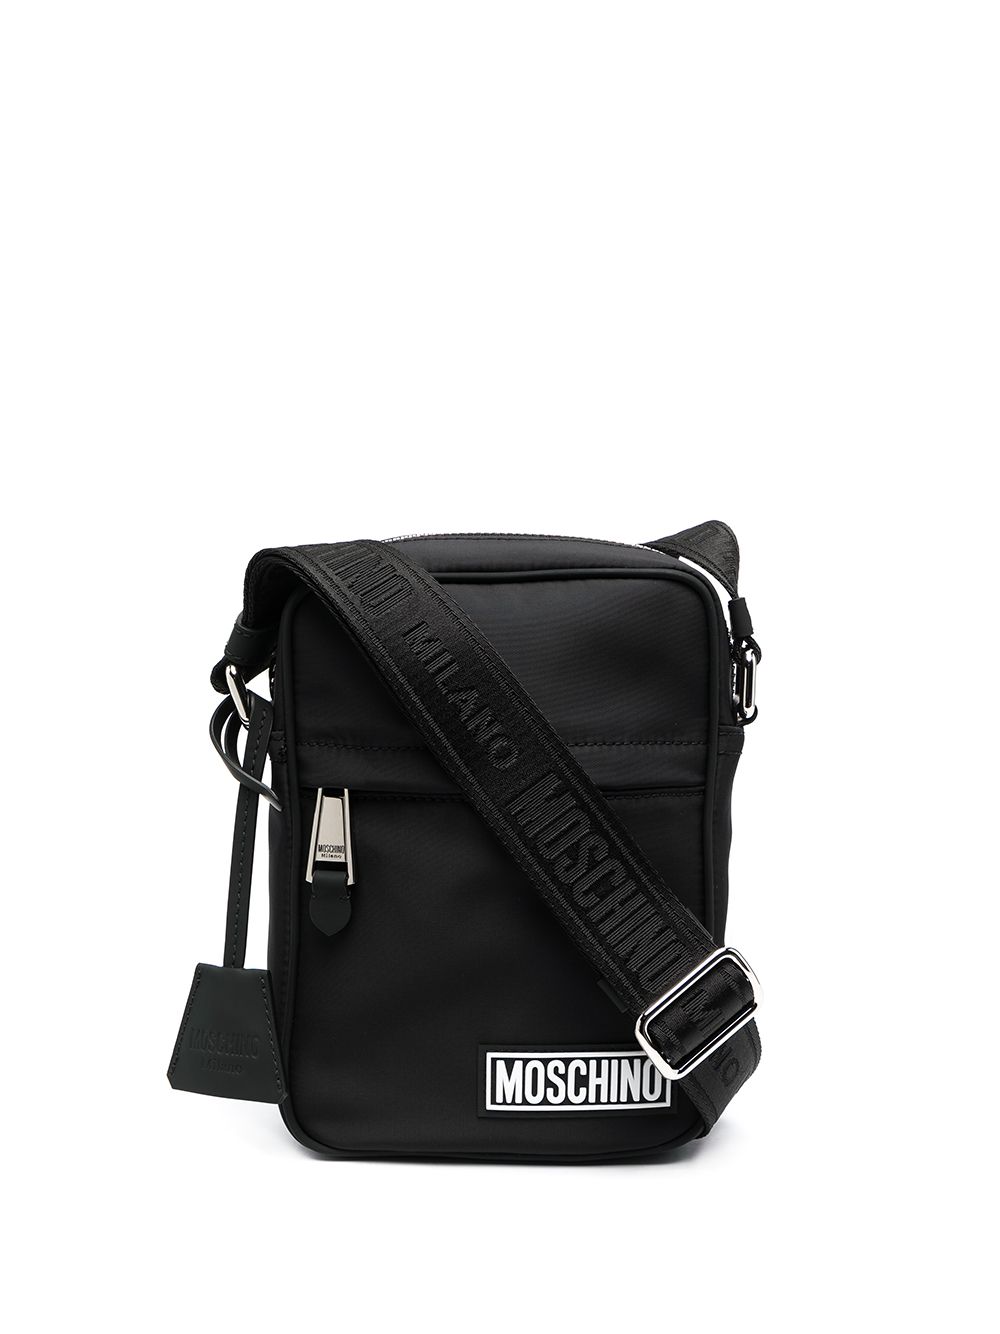 Moschino Men's Black Polyester Messenger Bag | ModeSens